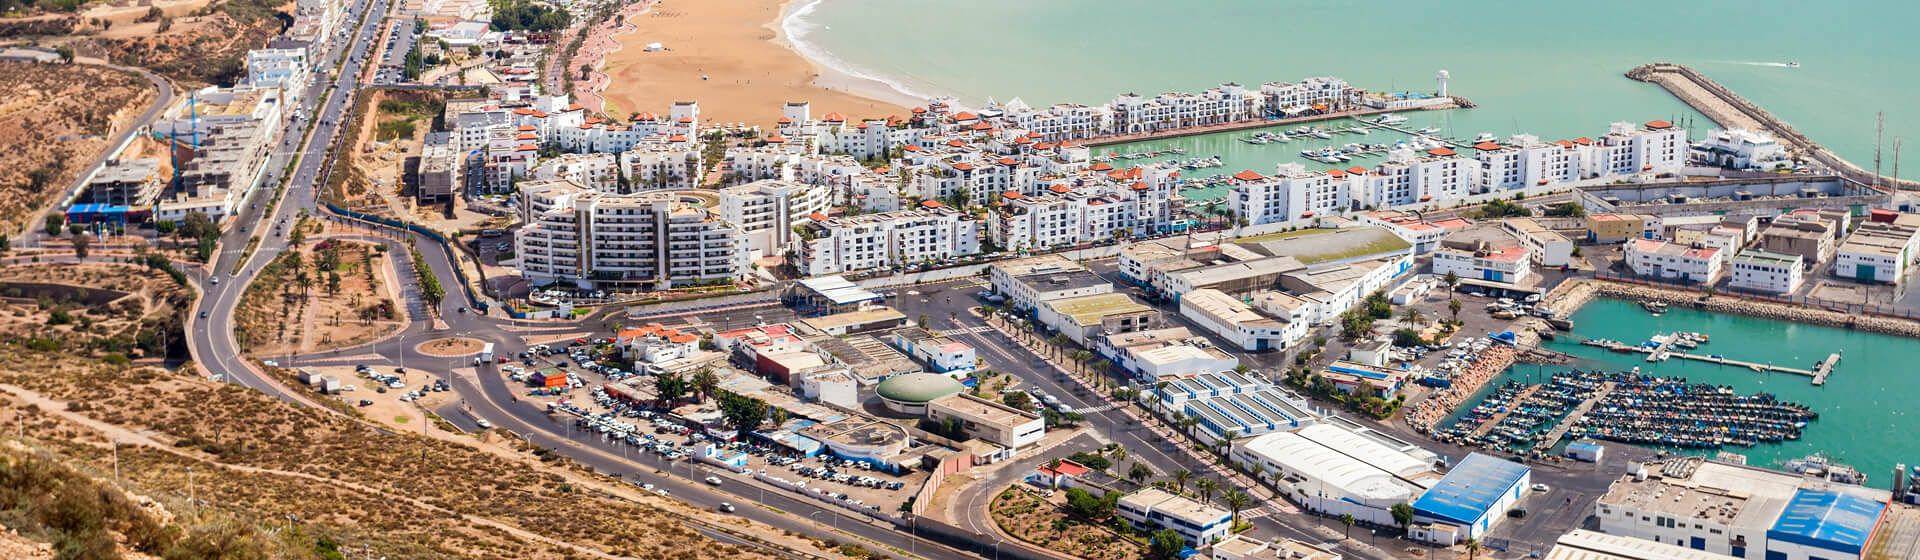 Holidays to Agadir Image